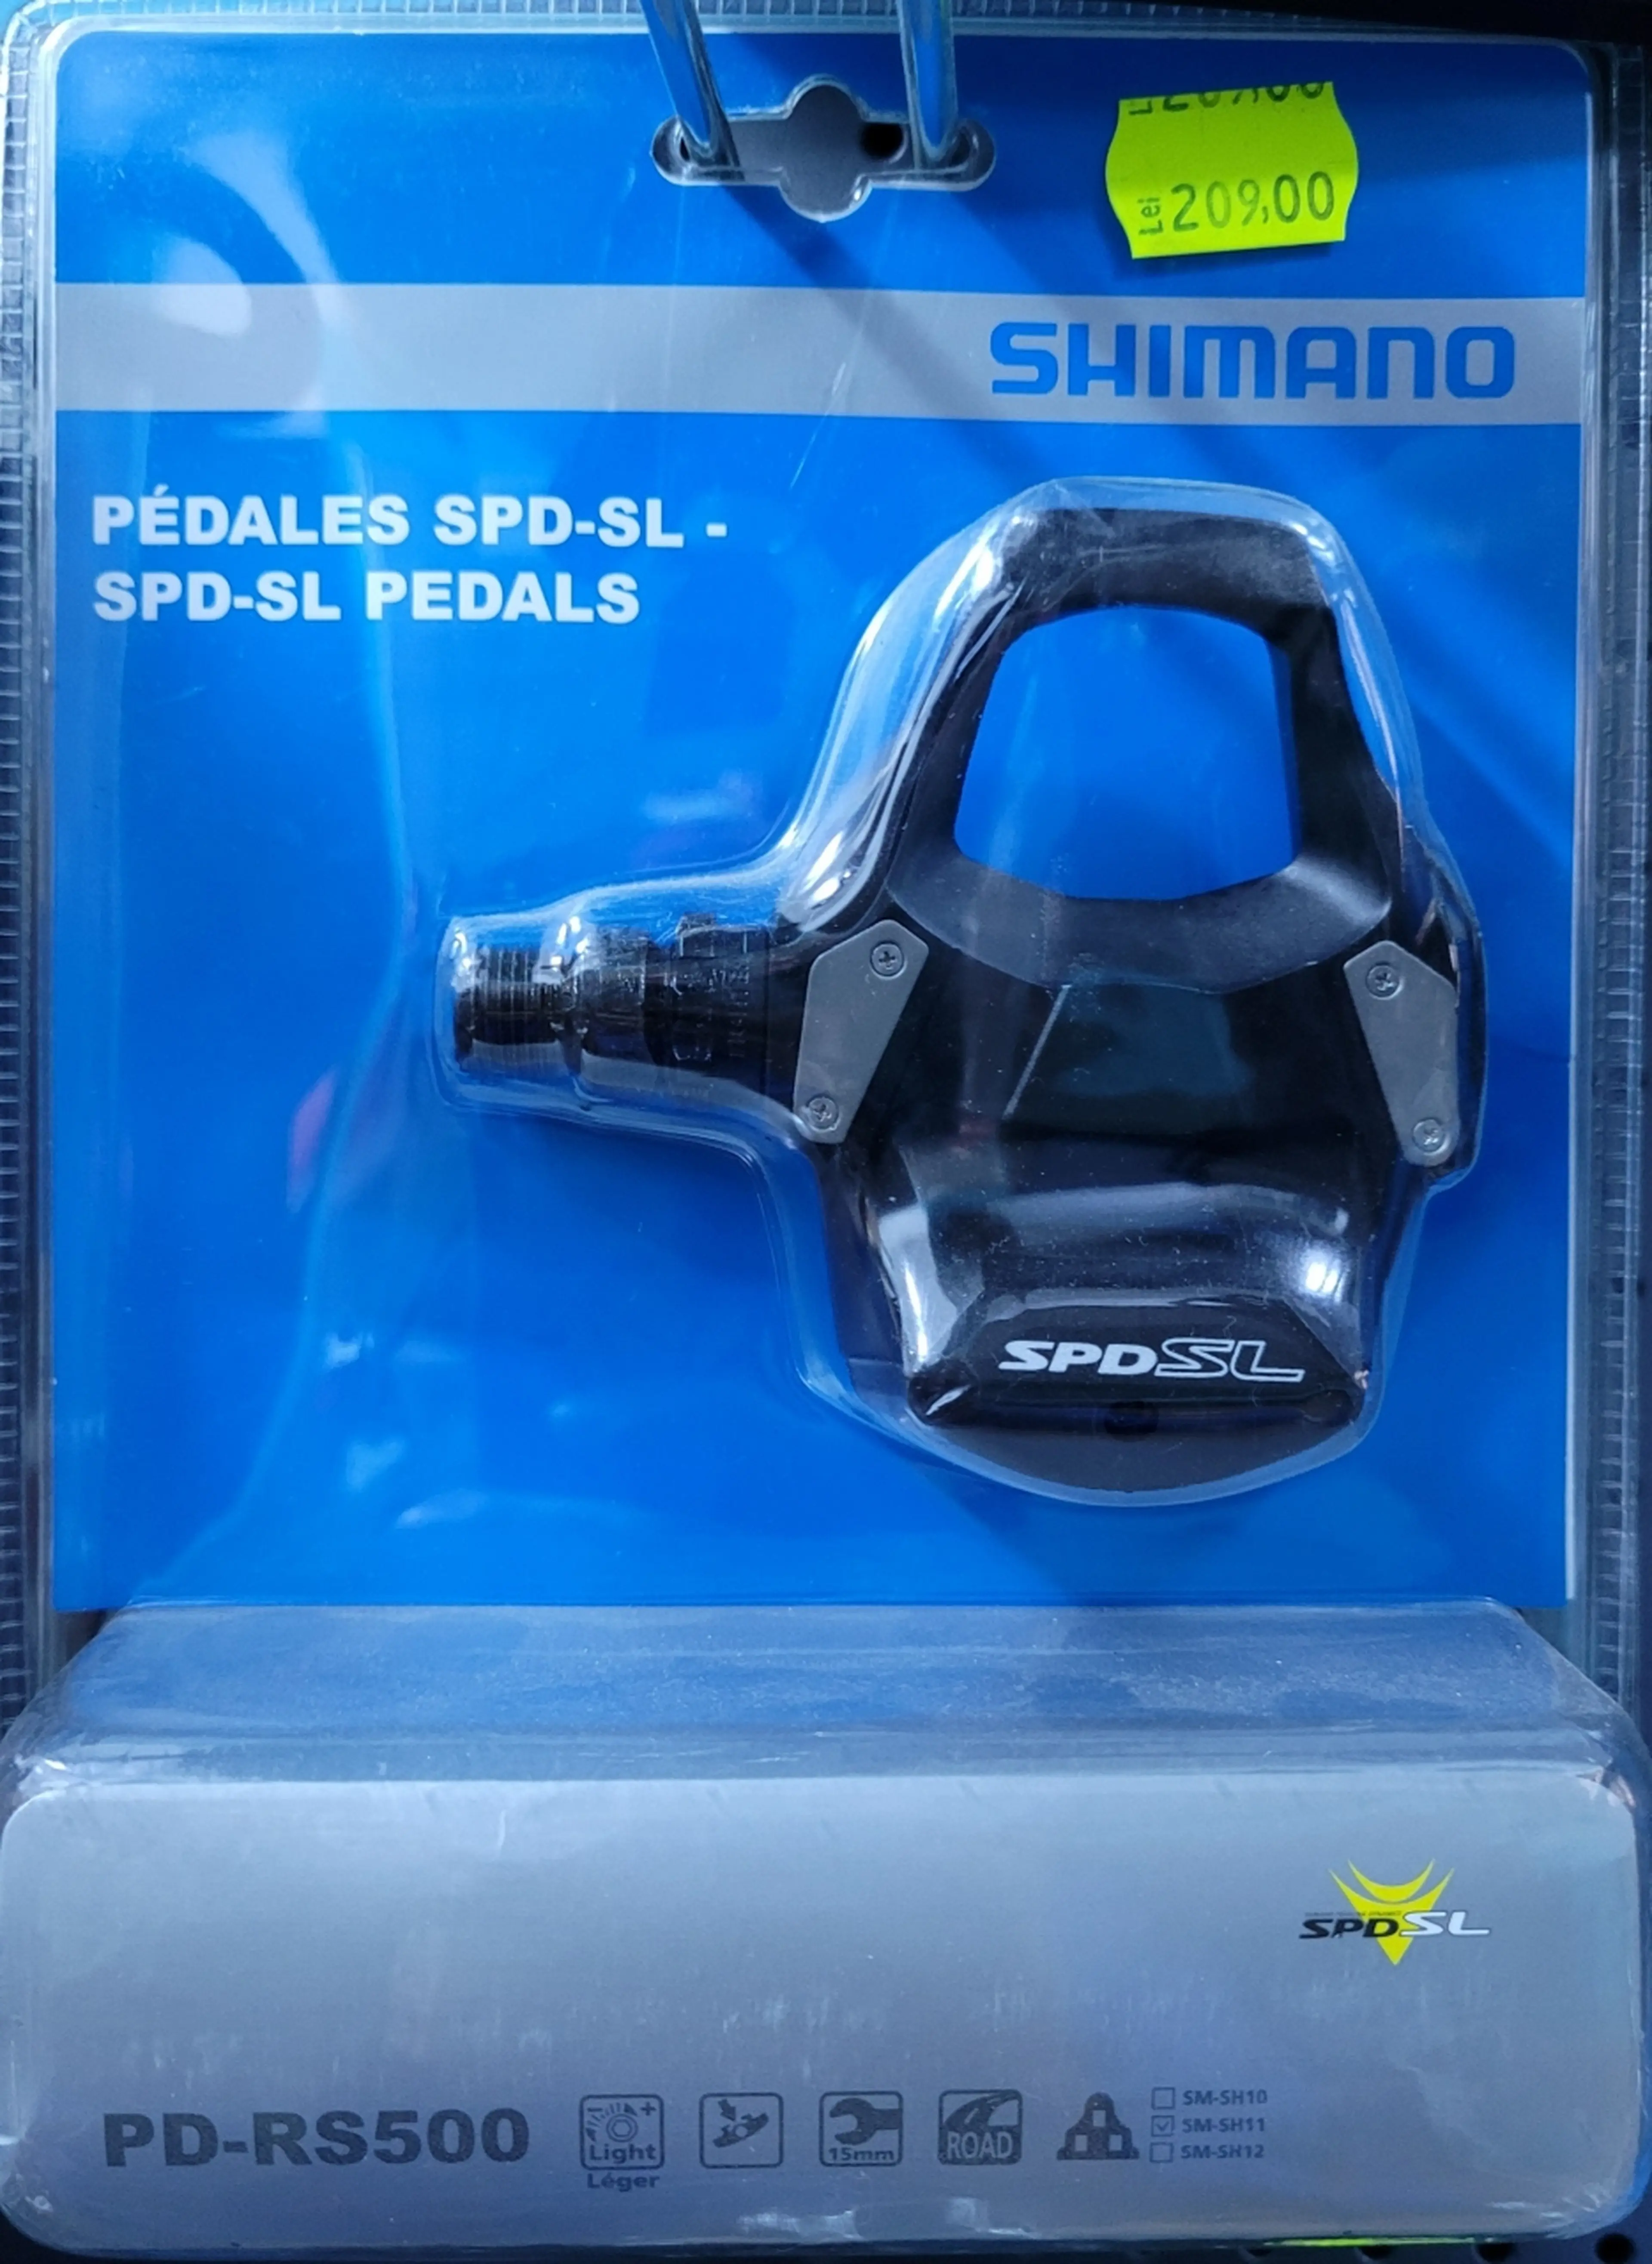 1. Pedale SPD RS 500